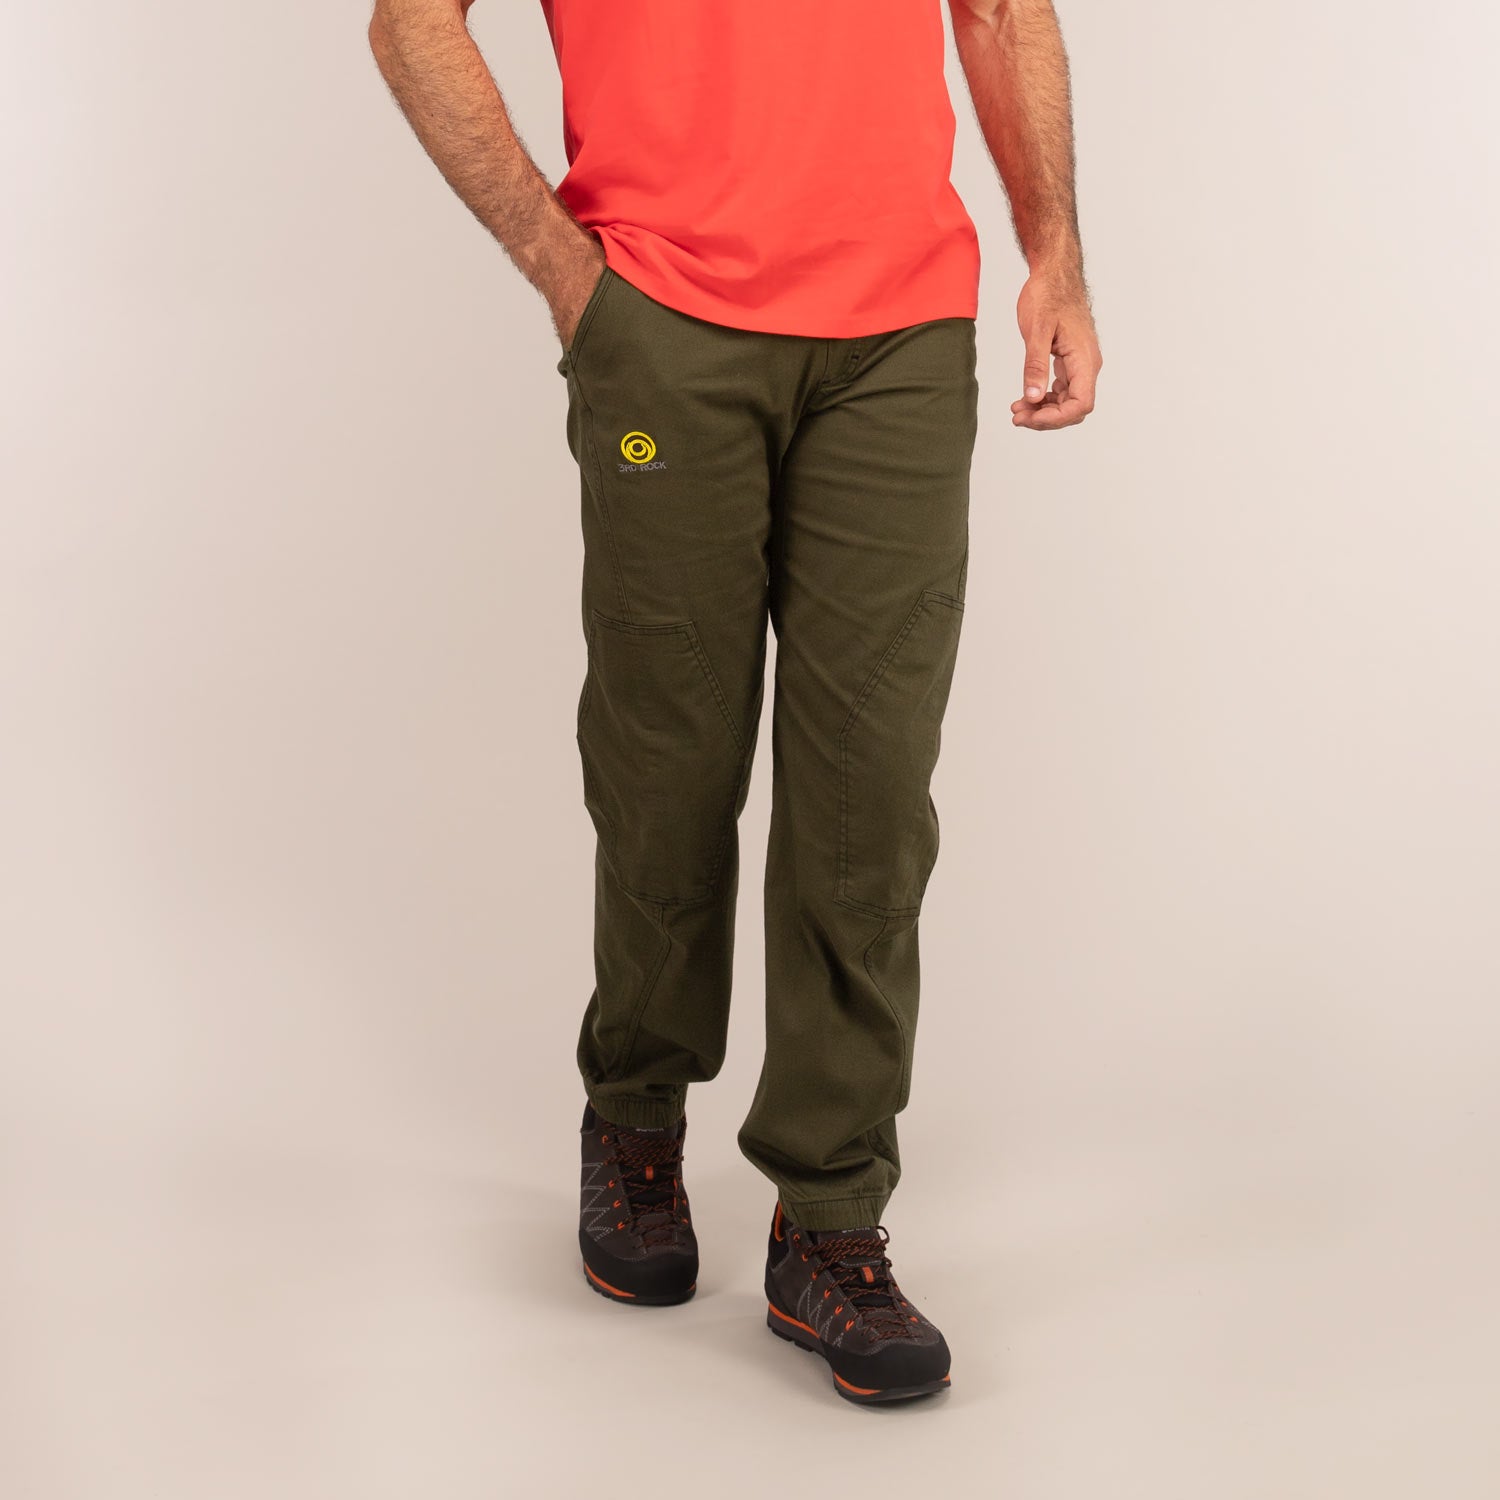 Canada Weather Gear Side Pocket Jogger Sweatpants - Brown